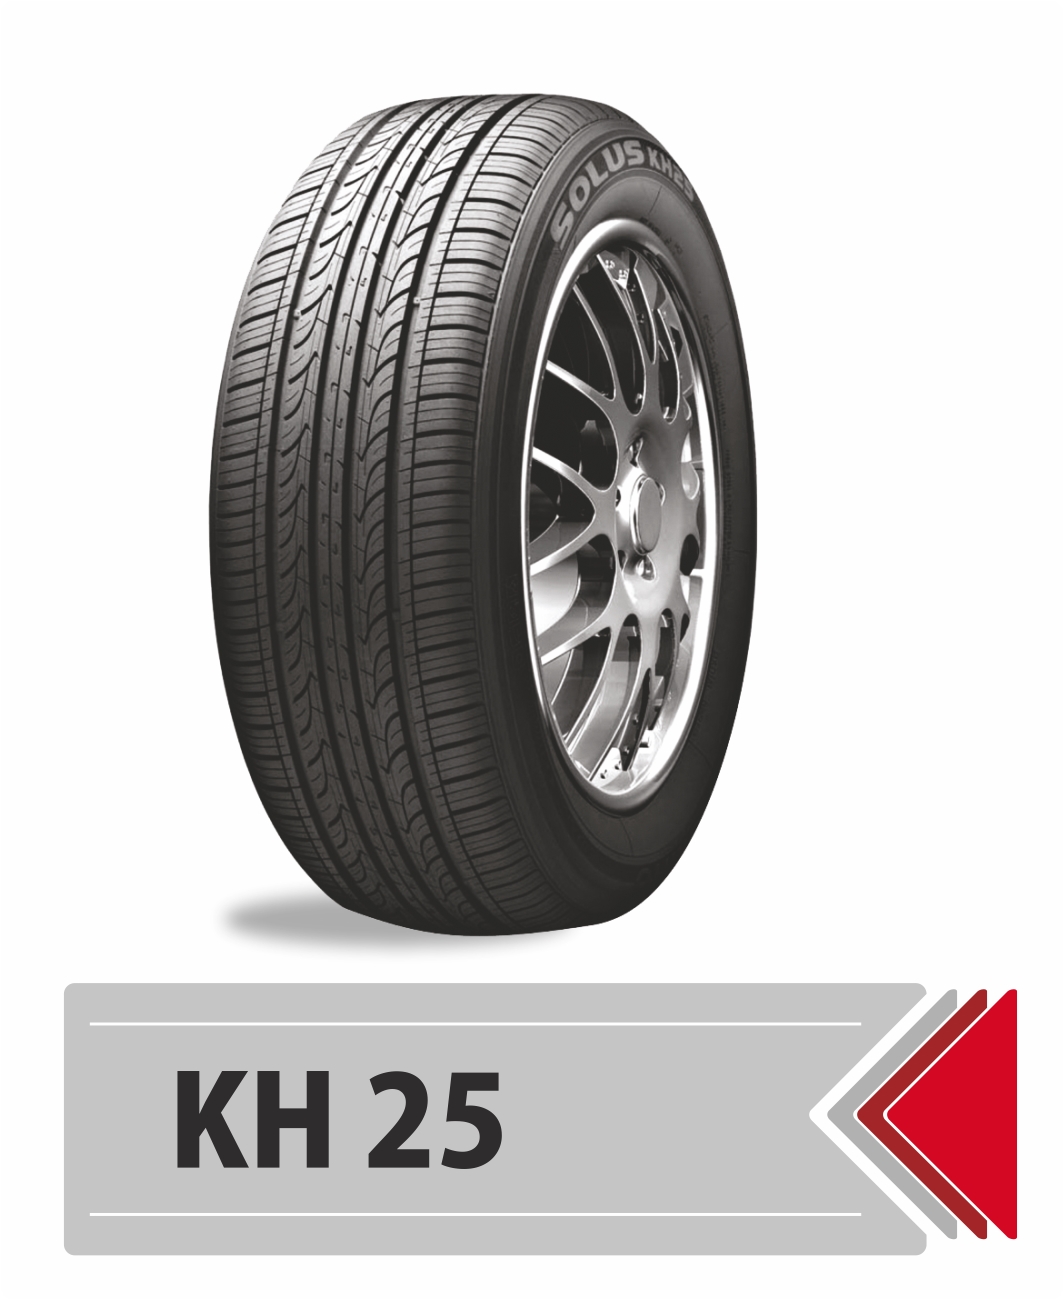 Kumho KH25  91 V FSL  (615 kg 240 km/h)  nyrigumi 205/55R17